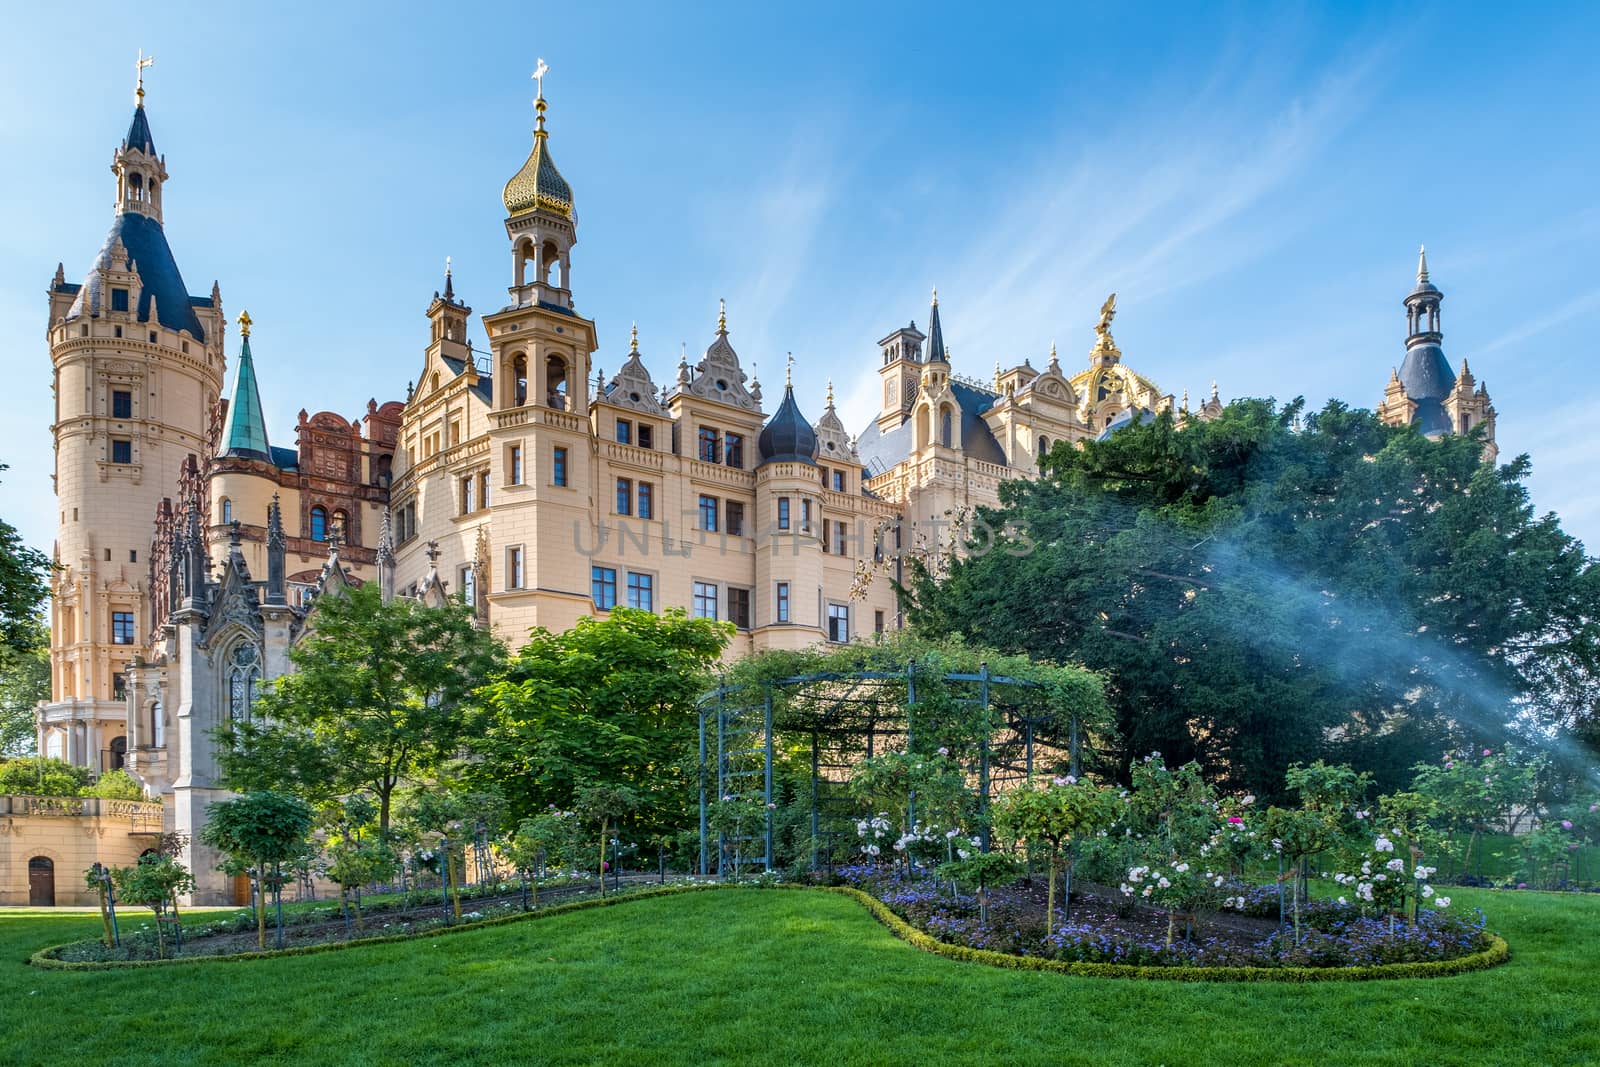 Beautiful fairytale castle in Schwerin on a summer day by Fischeron